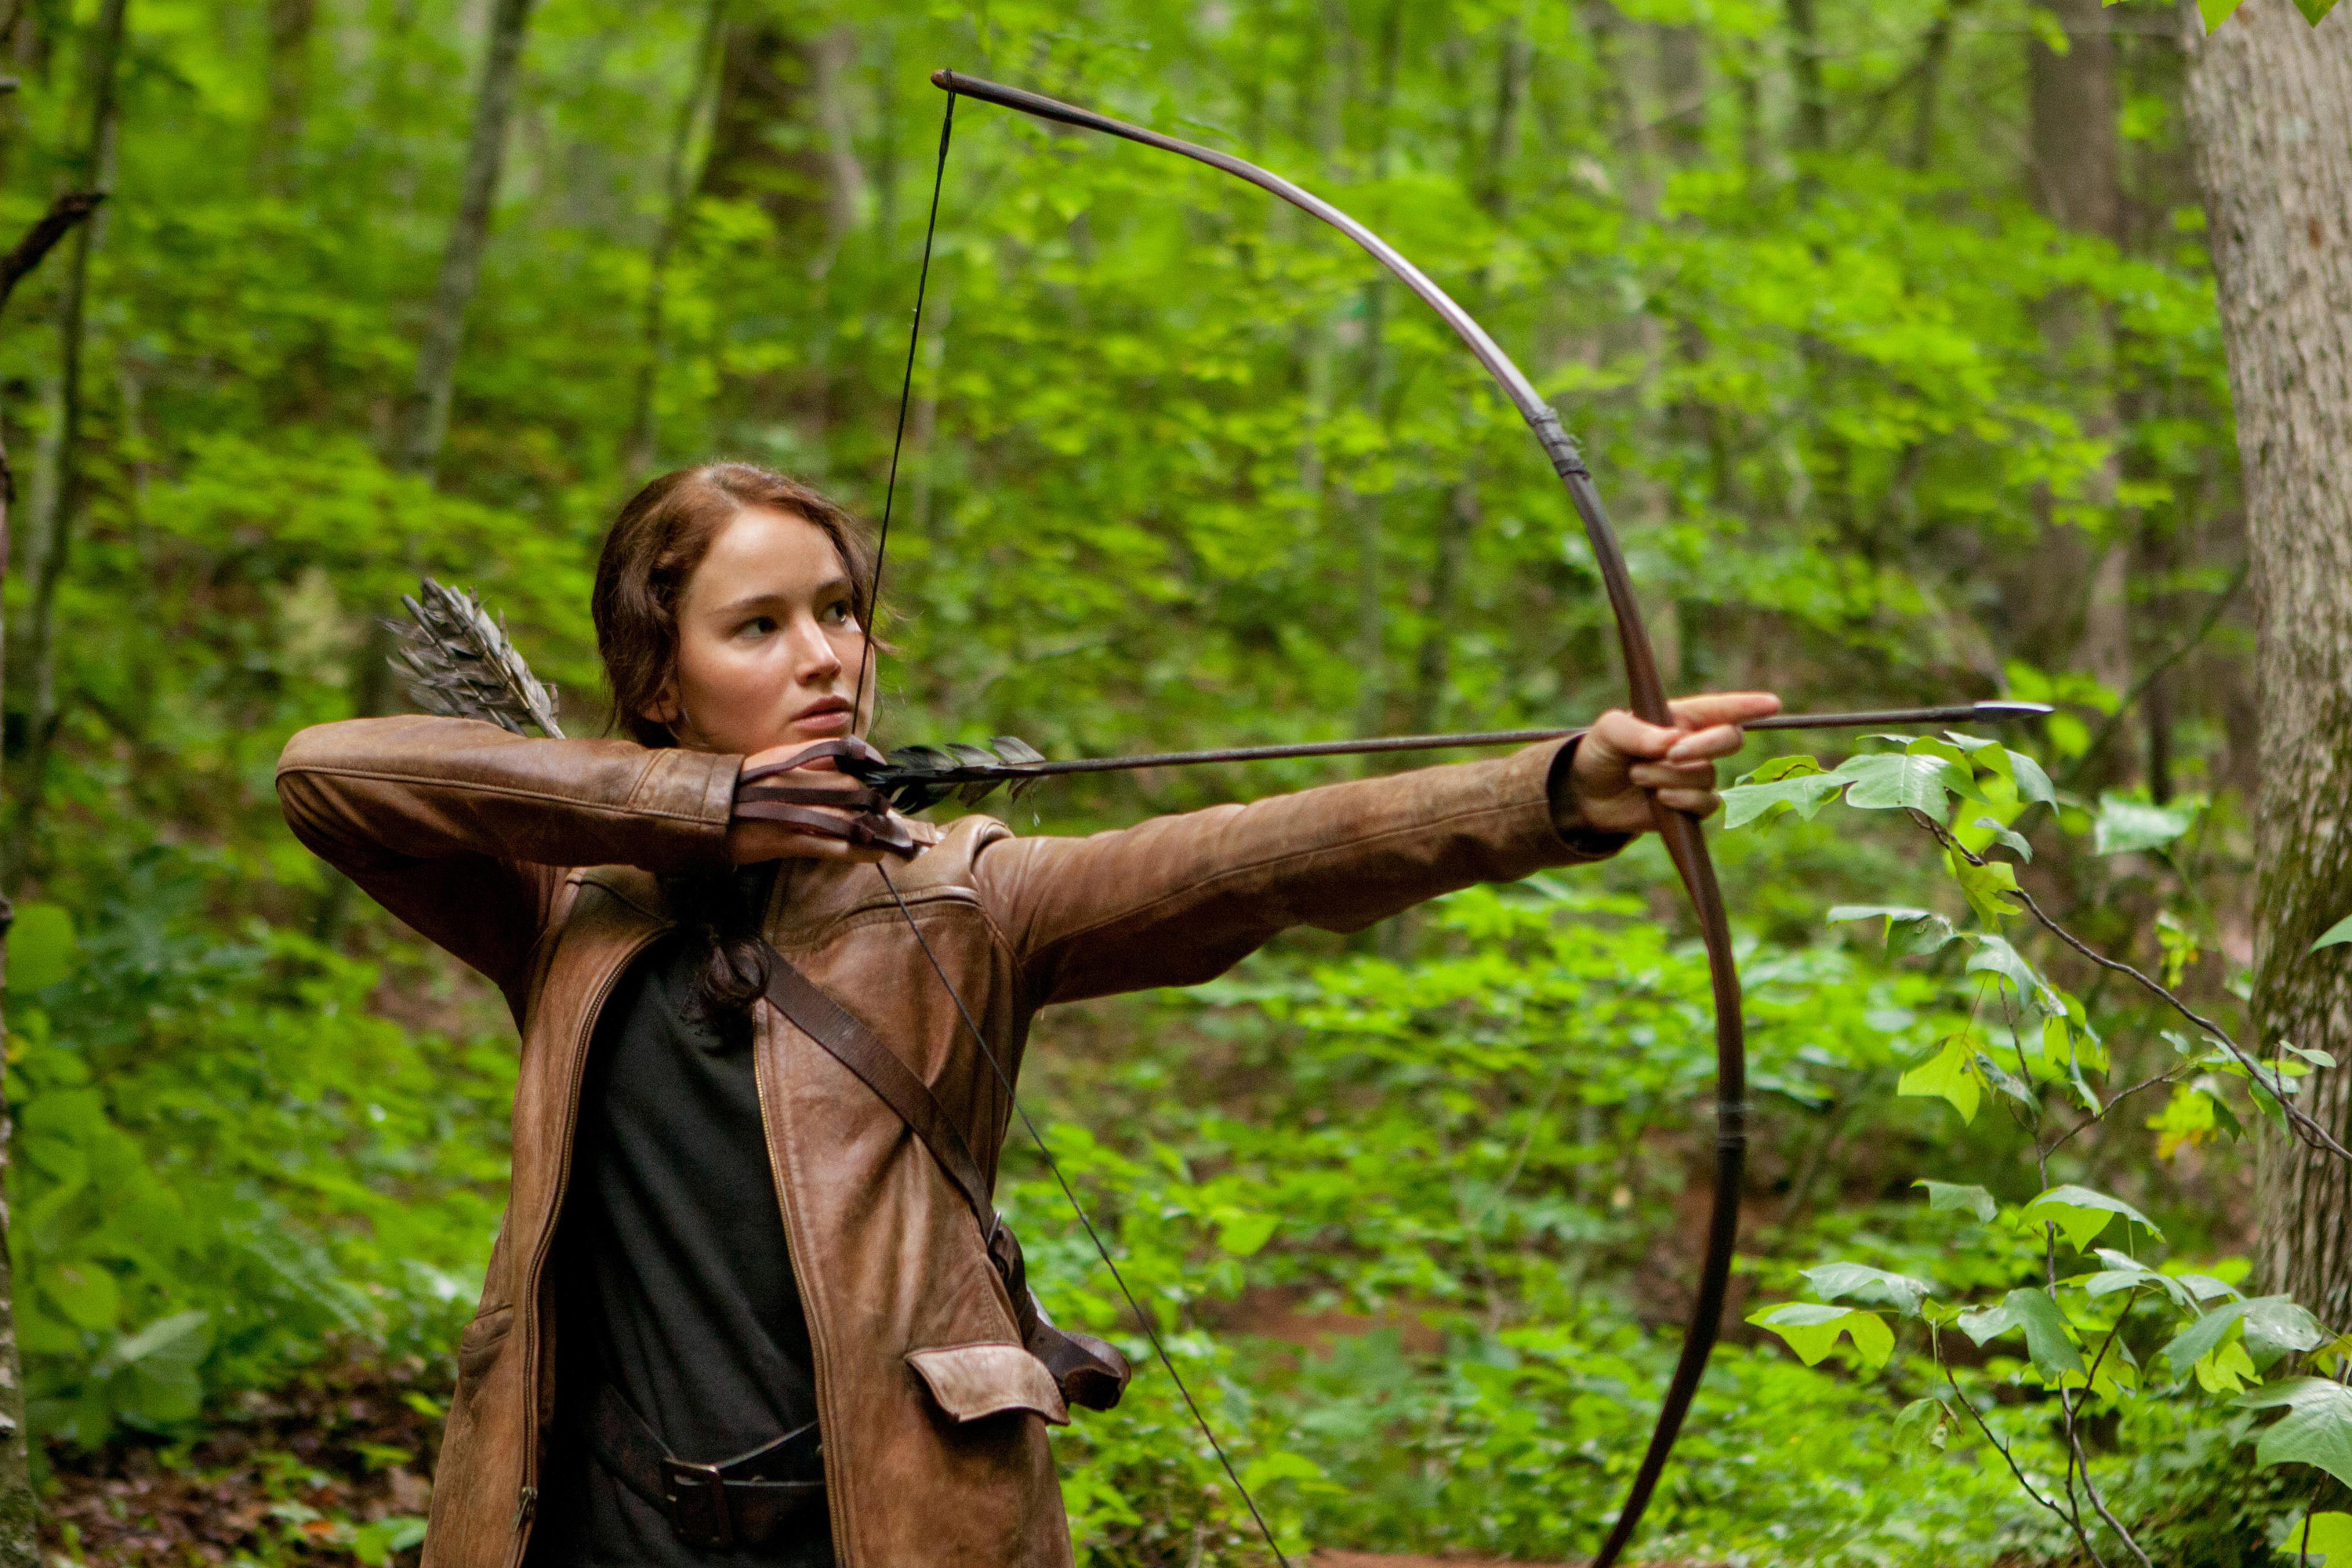 Katniss aims her bow and arrow